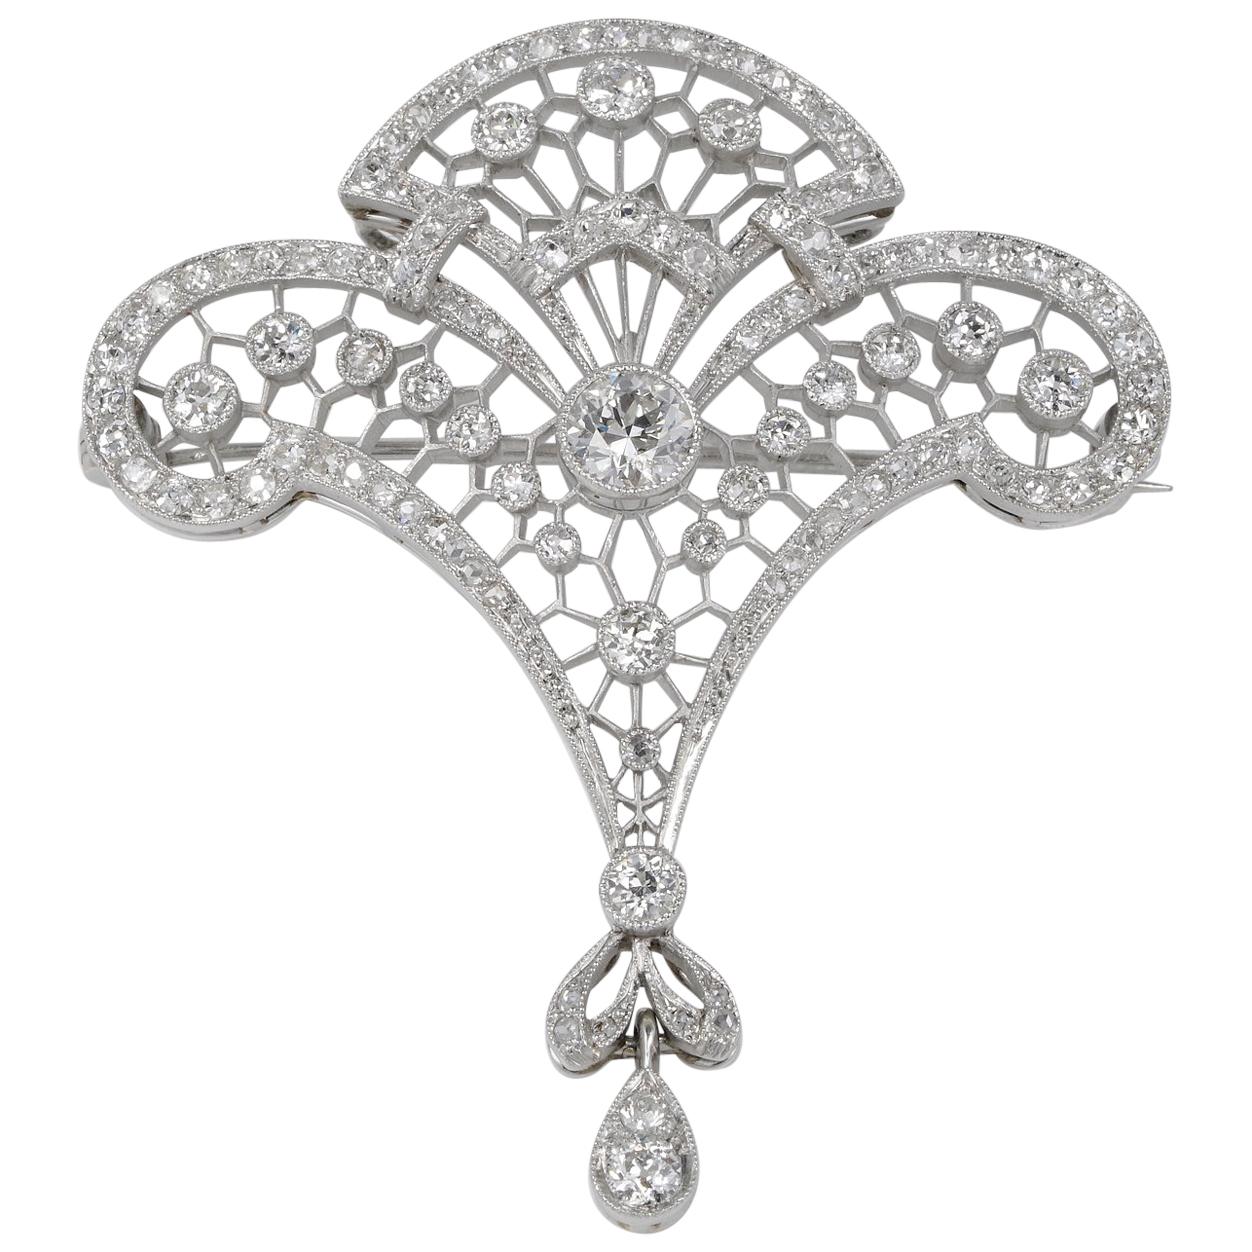 Stunning Belle Époque 2.95 Carat Diamond Rare Platinum Lavaliere Brooch Pendant